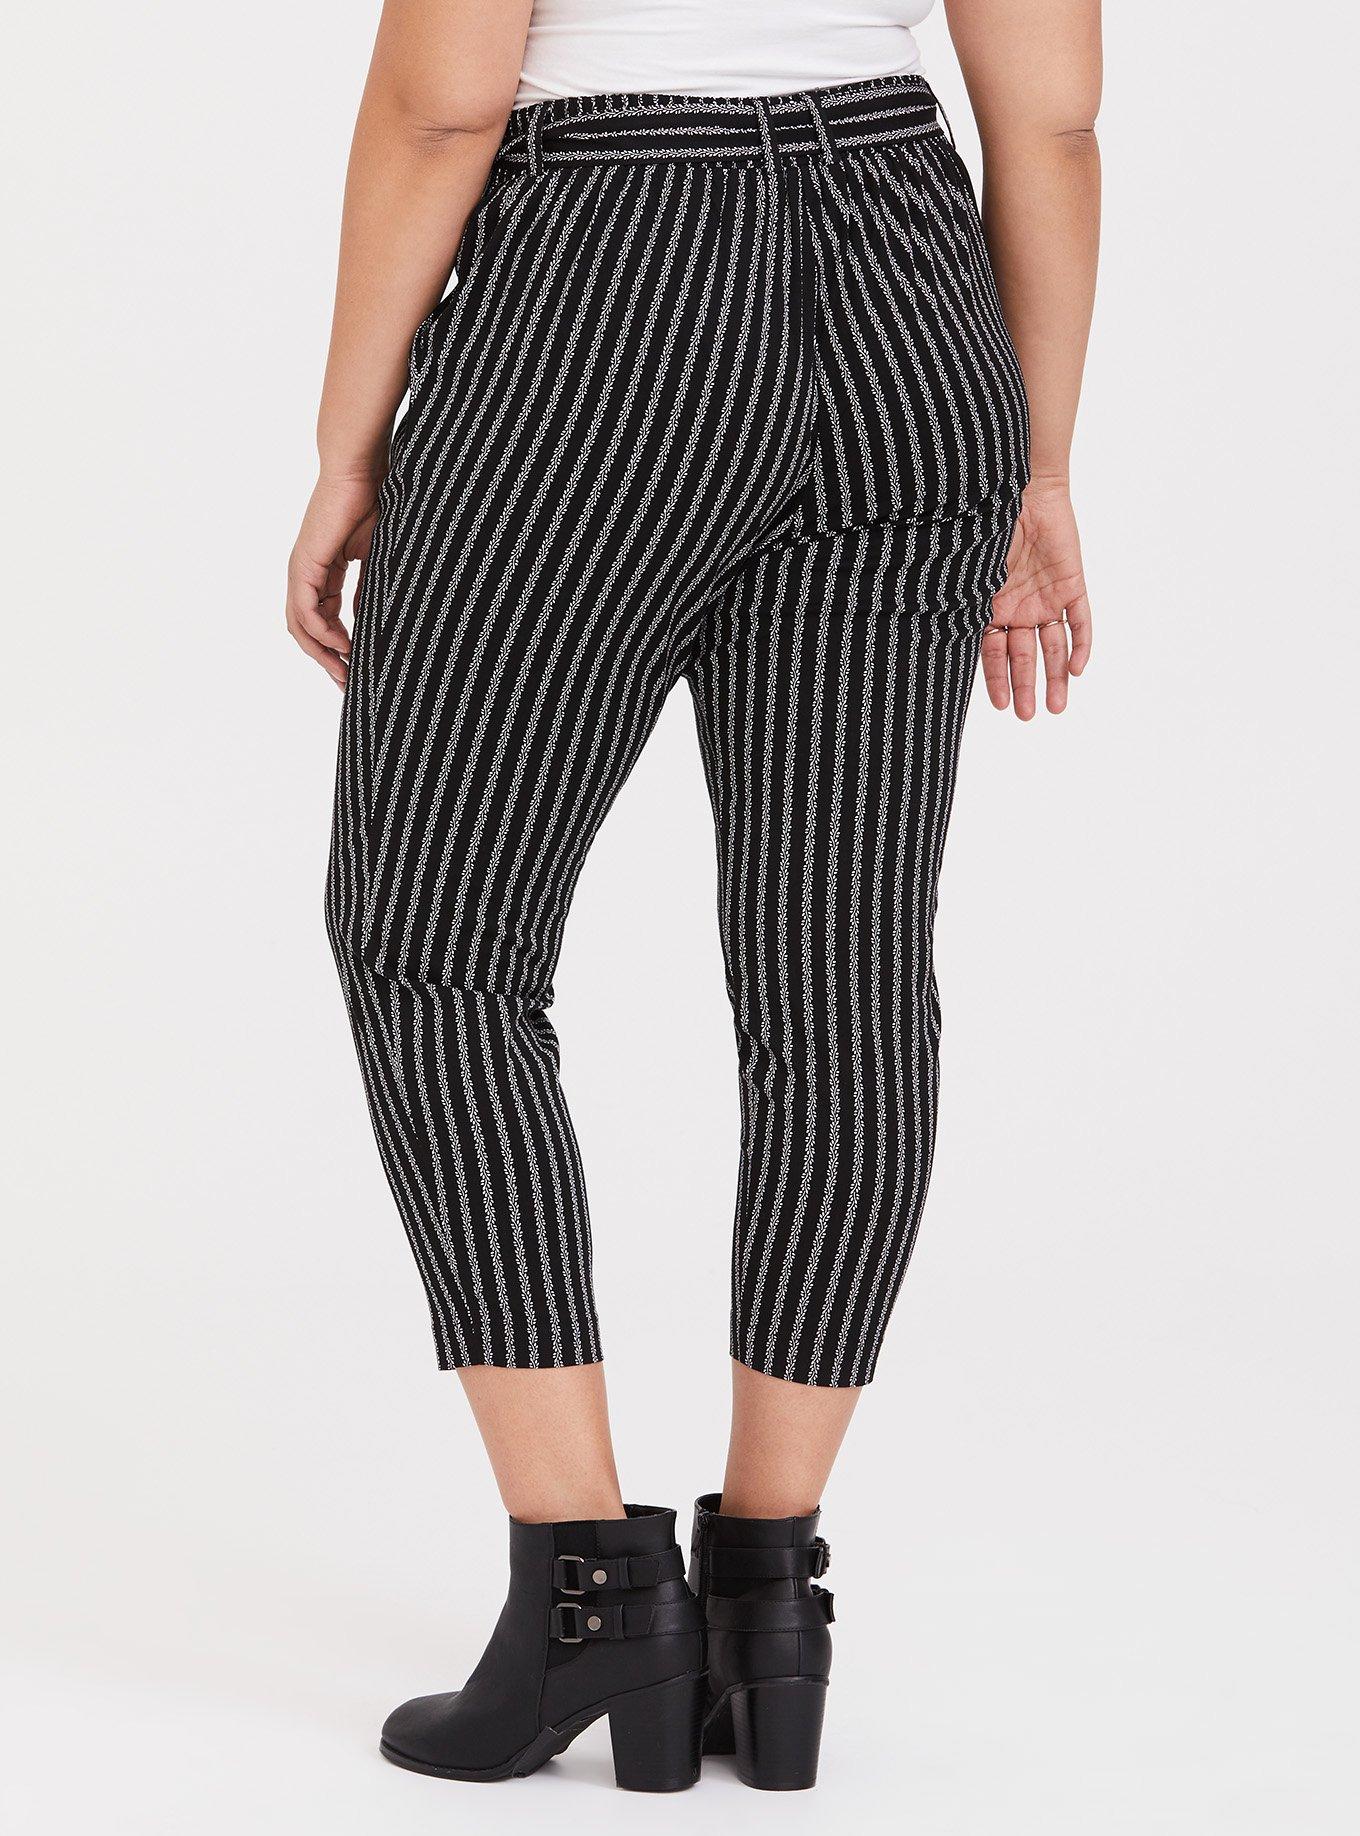 Plus Size - Black and White Stripe Challis Tie Front Pant - Torrid